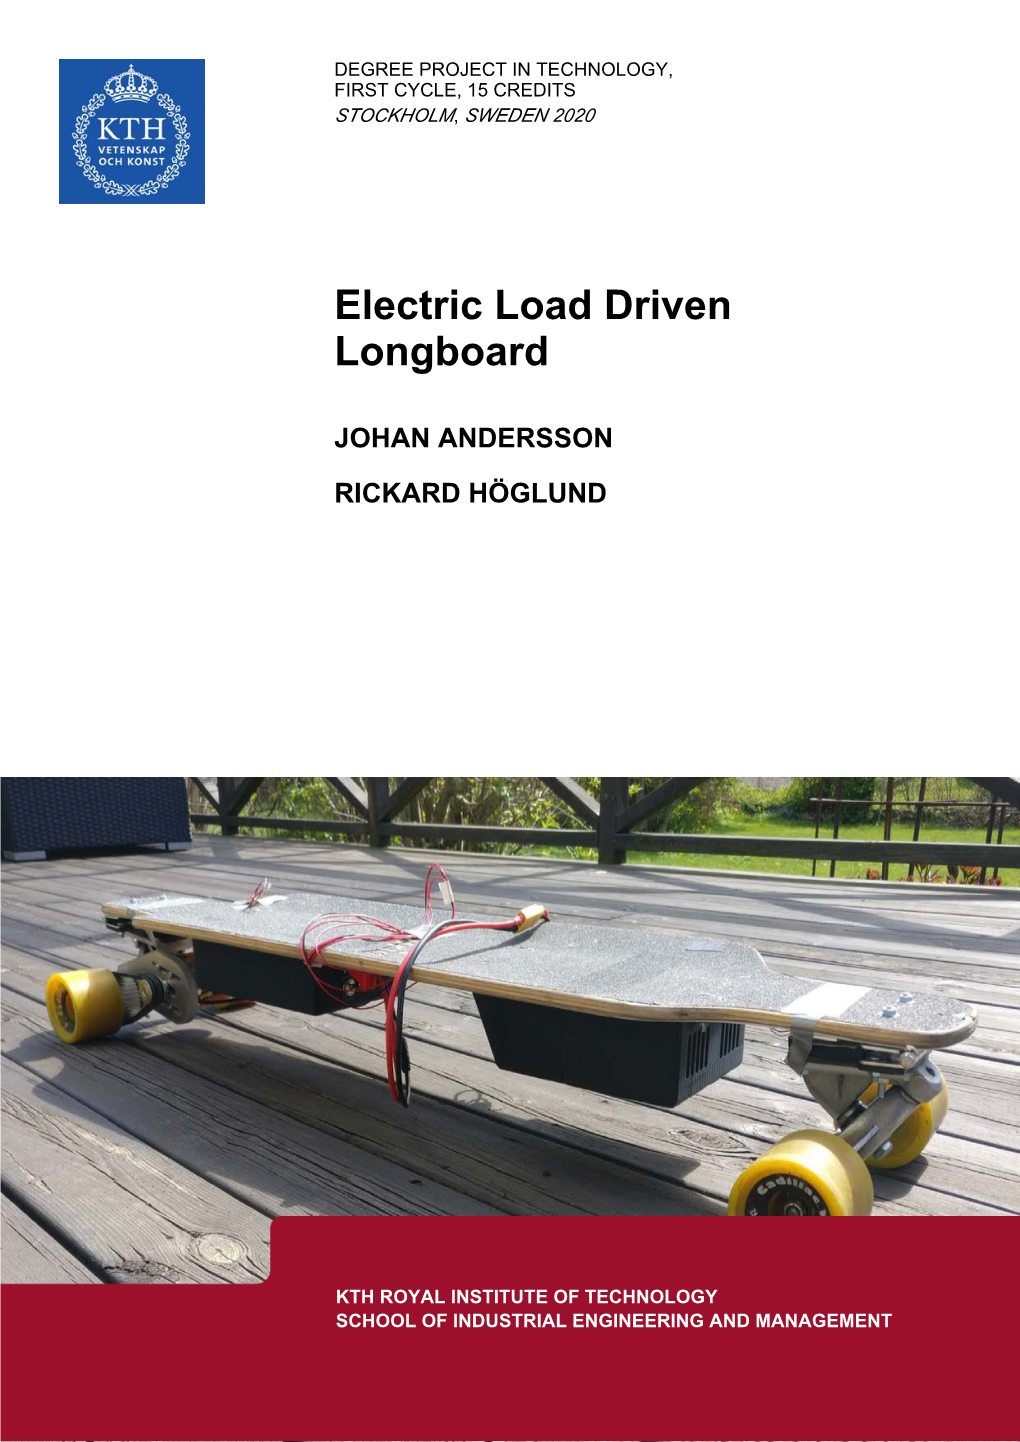 Electric Load Driven Longboard